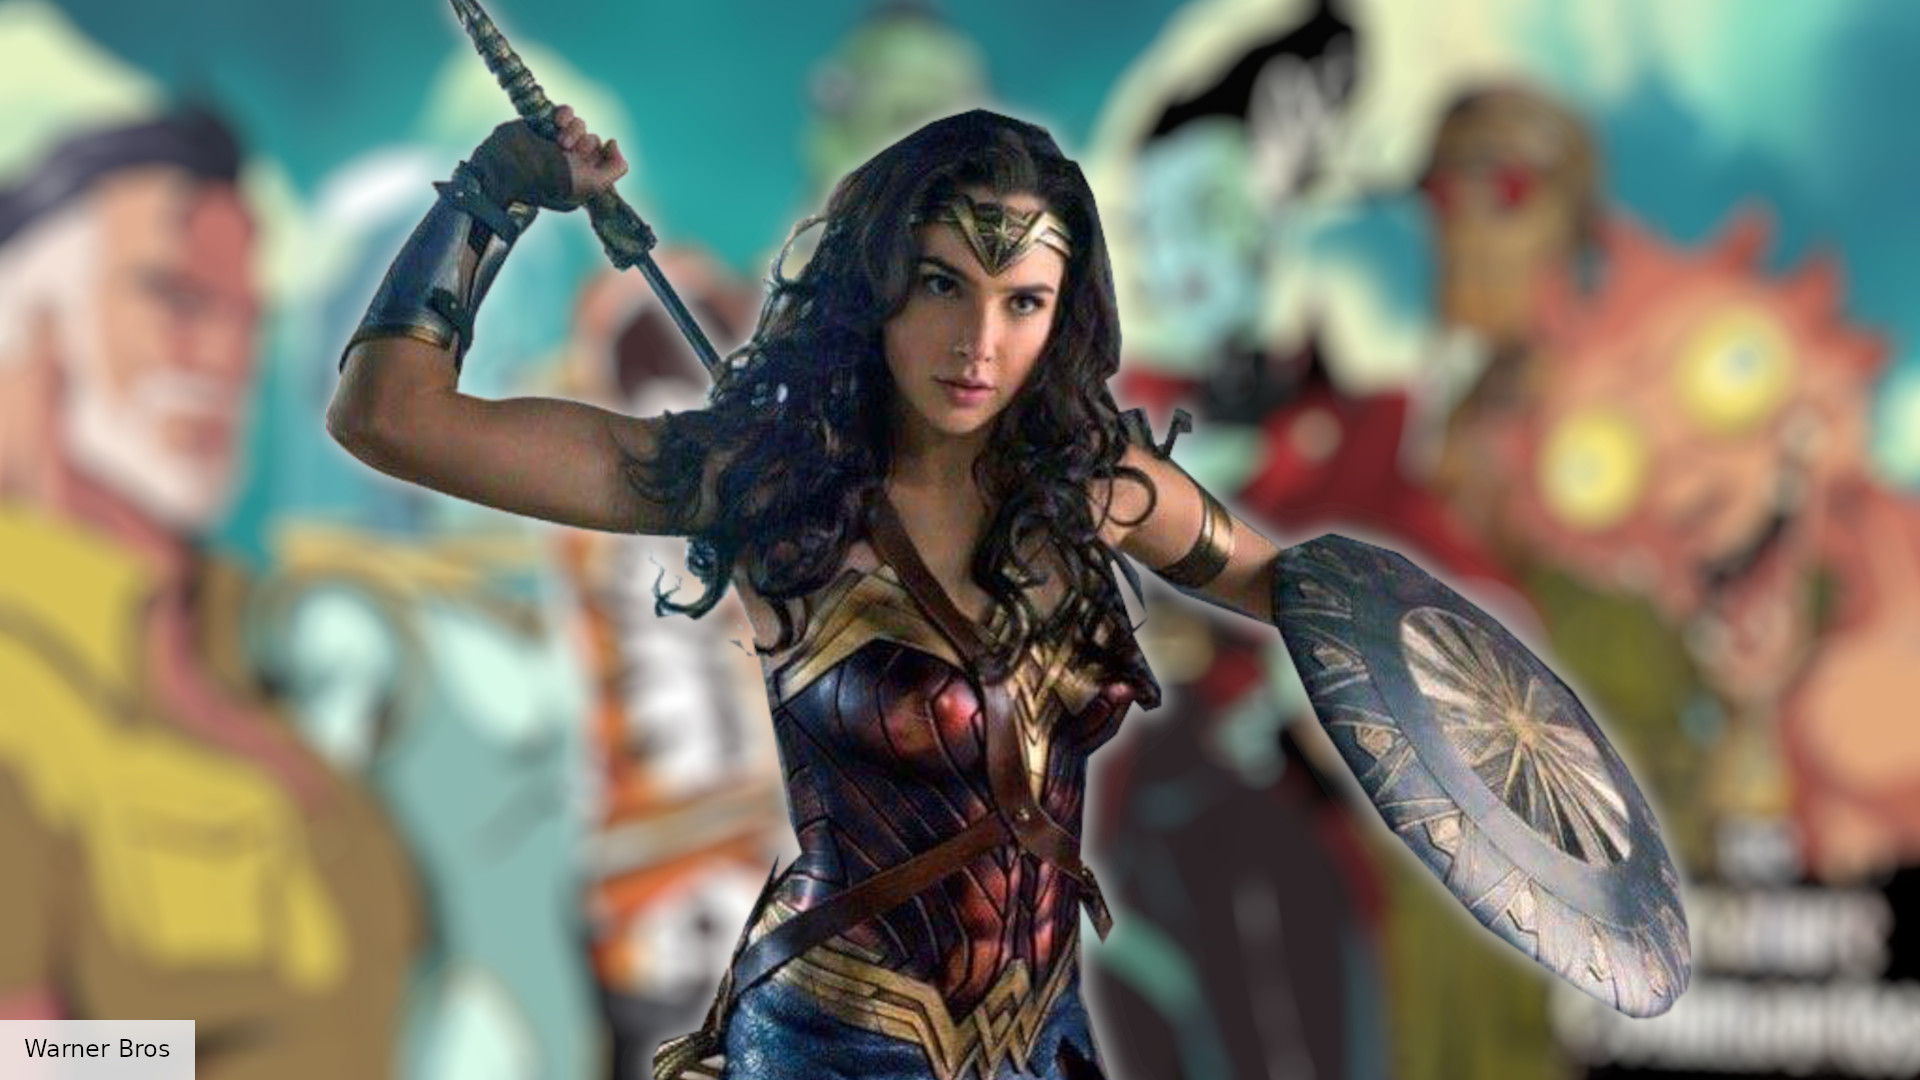 Creature Commandos rumors tease potential Wonder Woman reboot